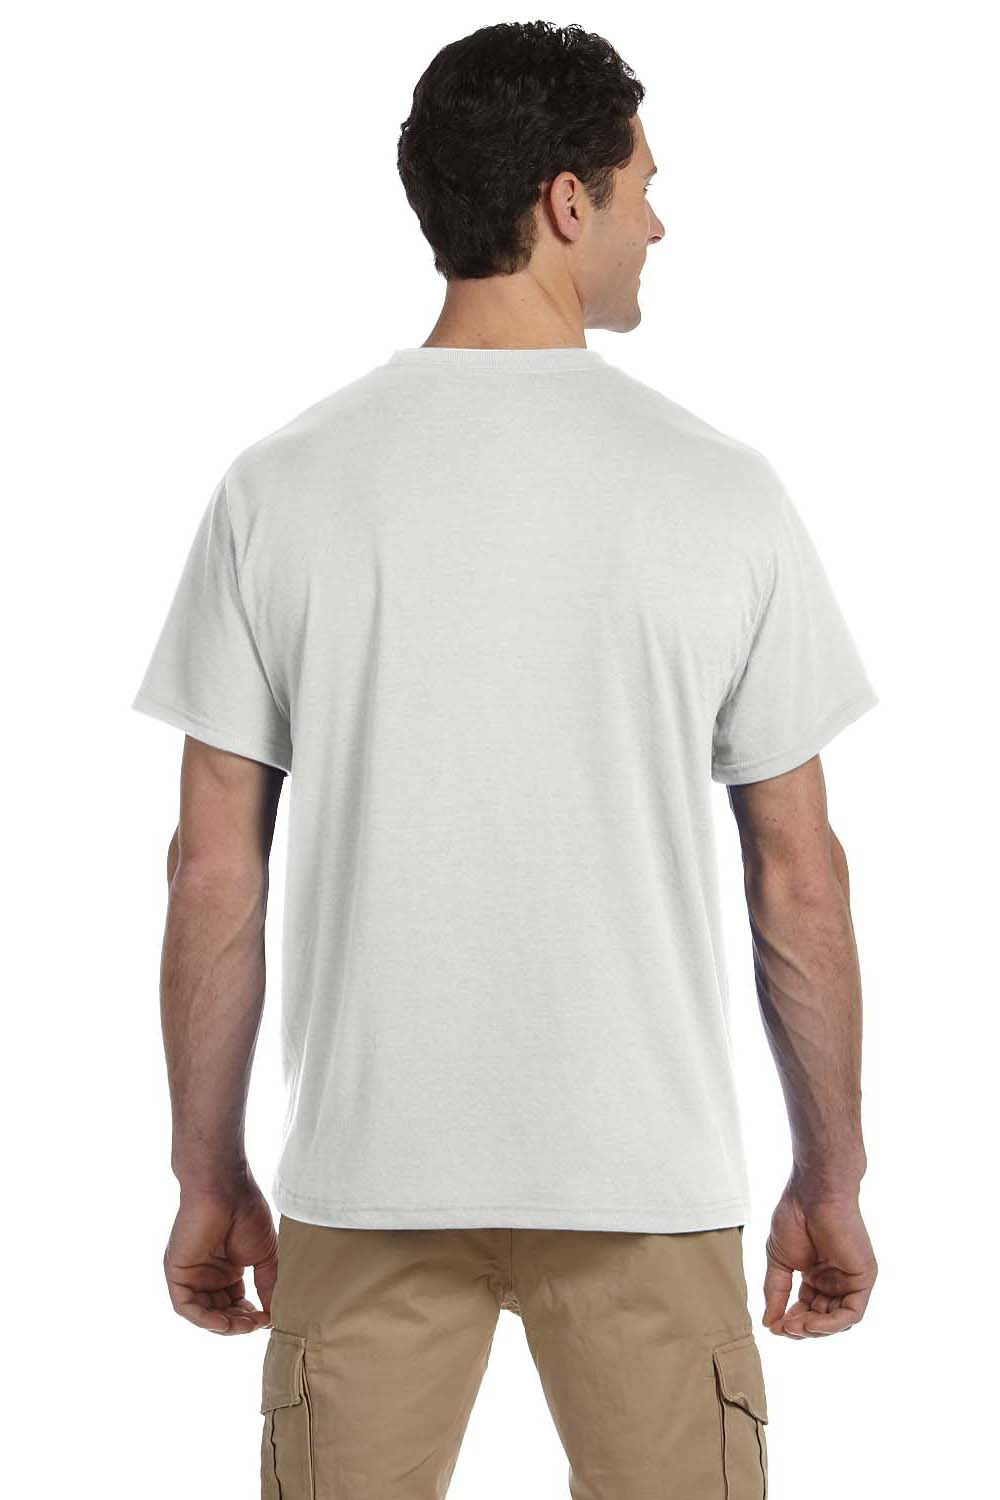 Jerzees 21M Mens Dri-Power Moisture Wicking Short Sleeve Crewneck T-Shirt White Back